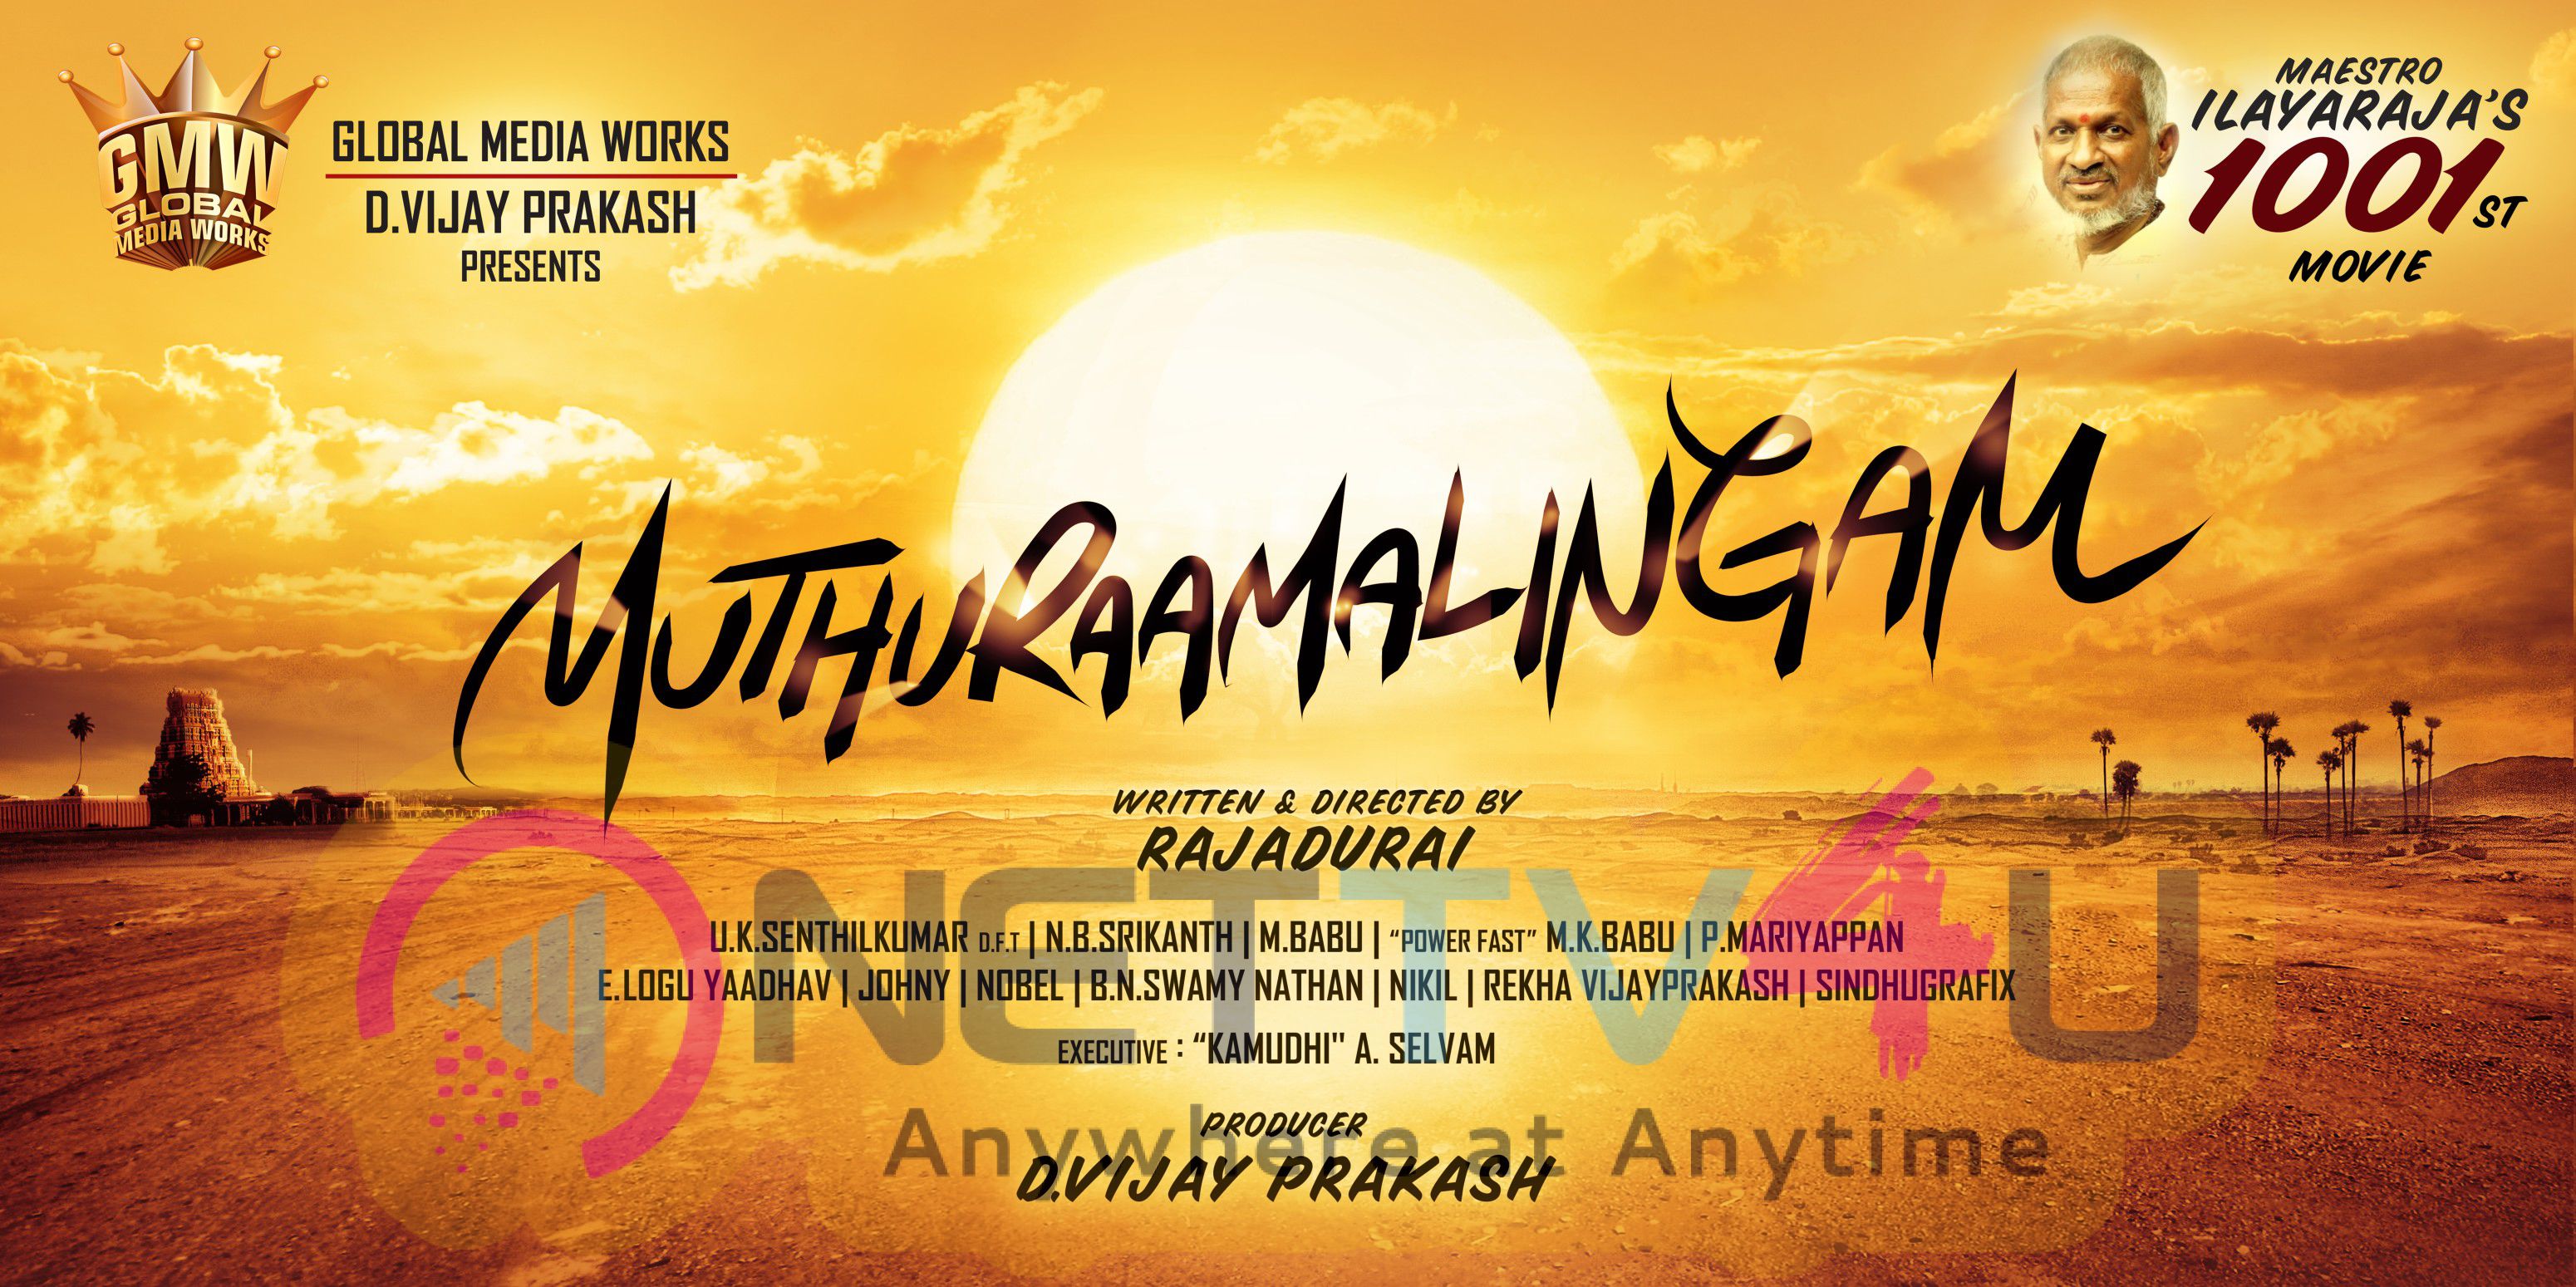  muthuraamalingam tamil movie poster 1